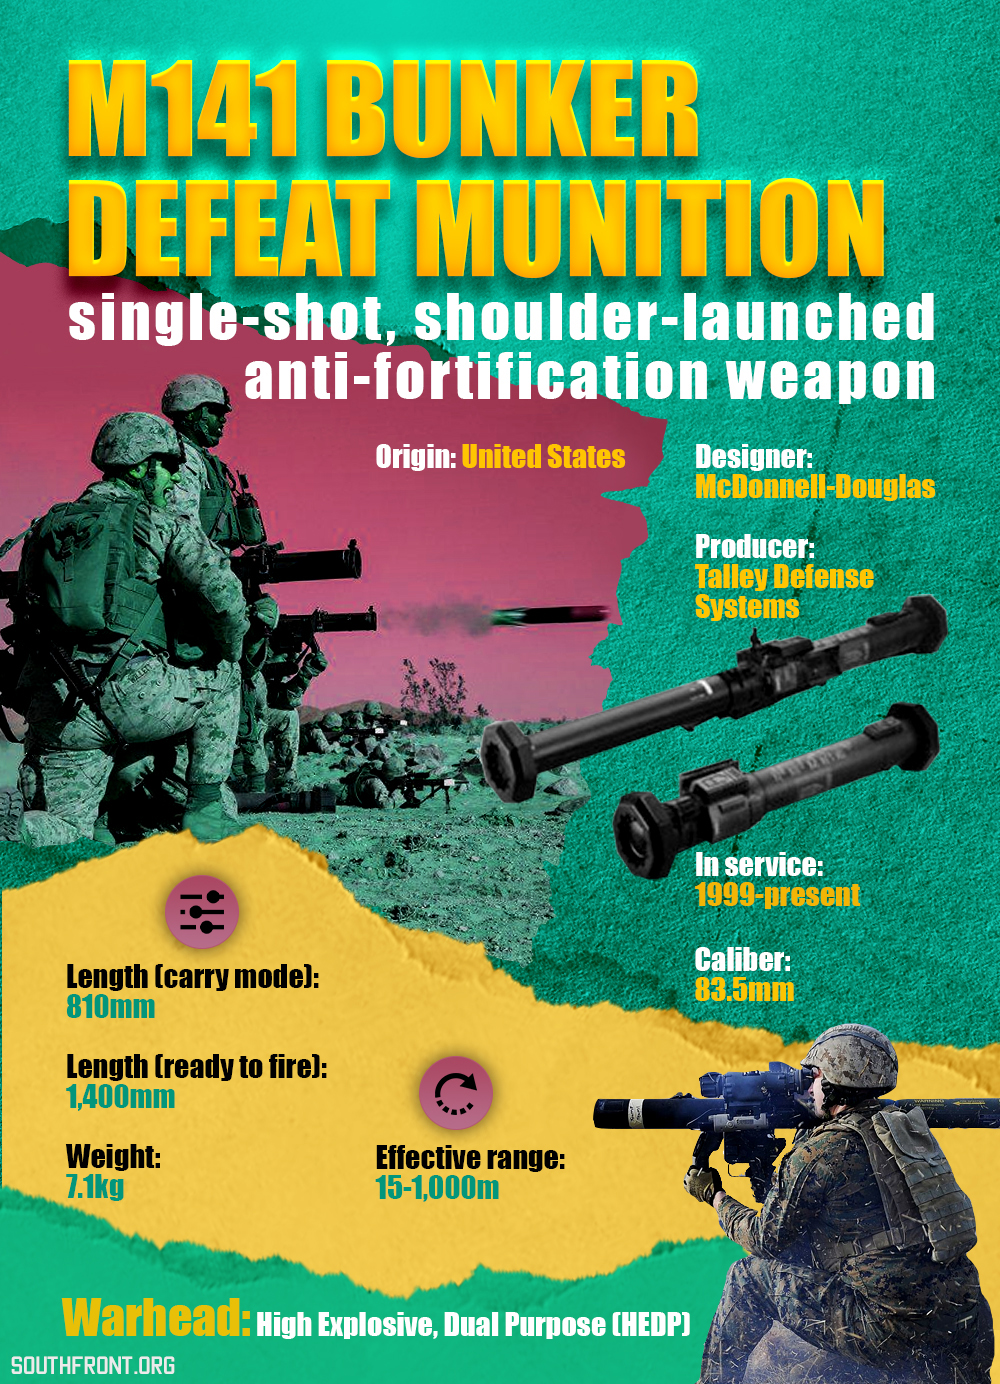 M141 Bunker Defeat Munition (Infographics)